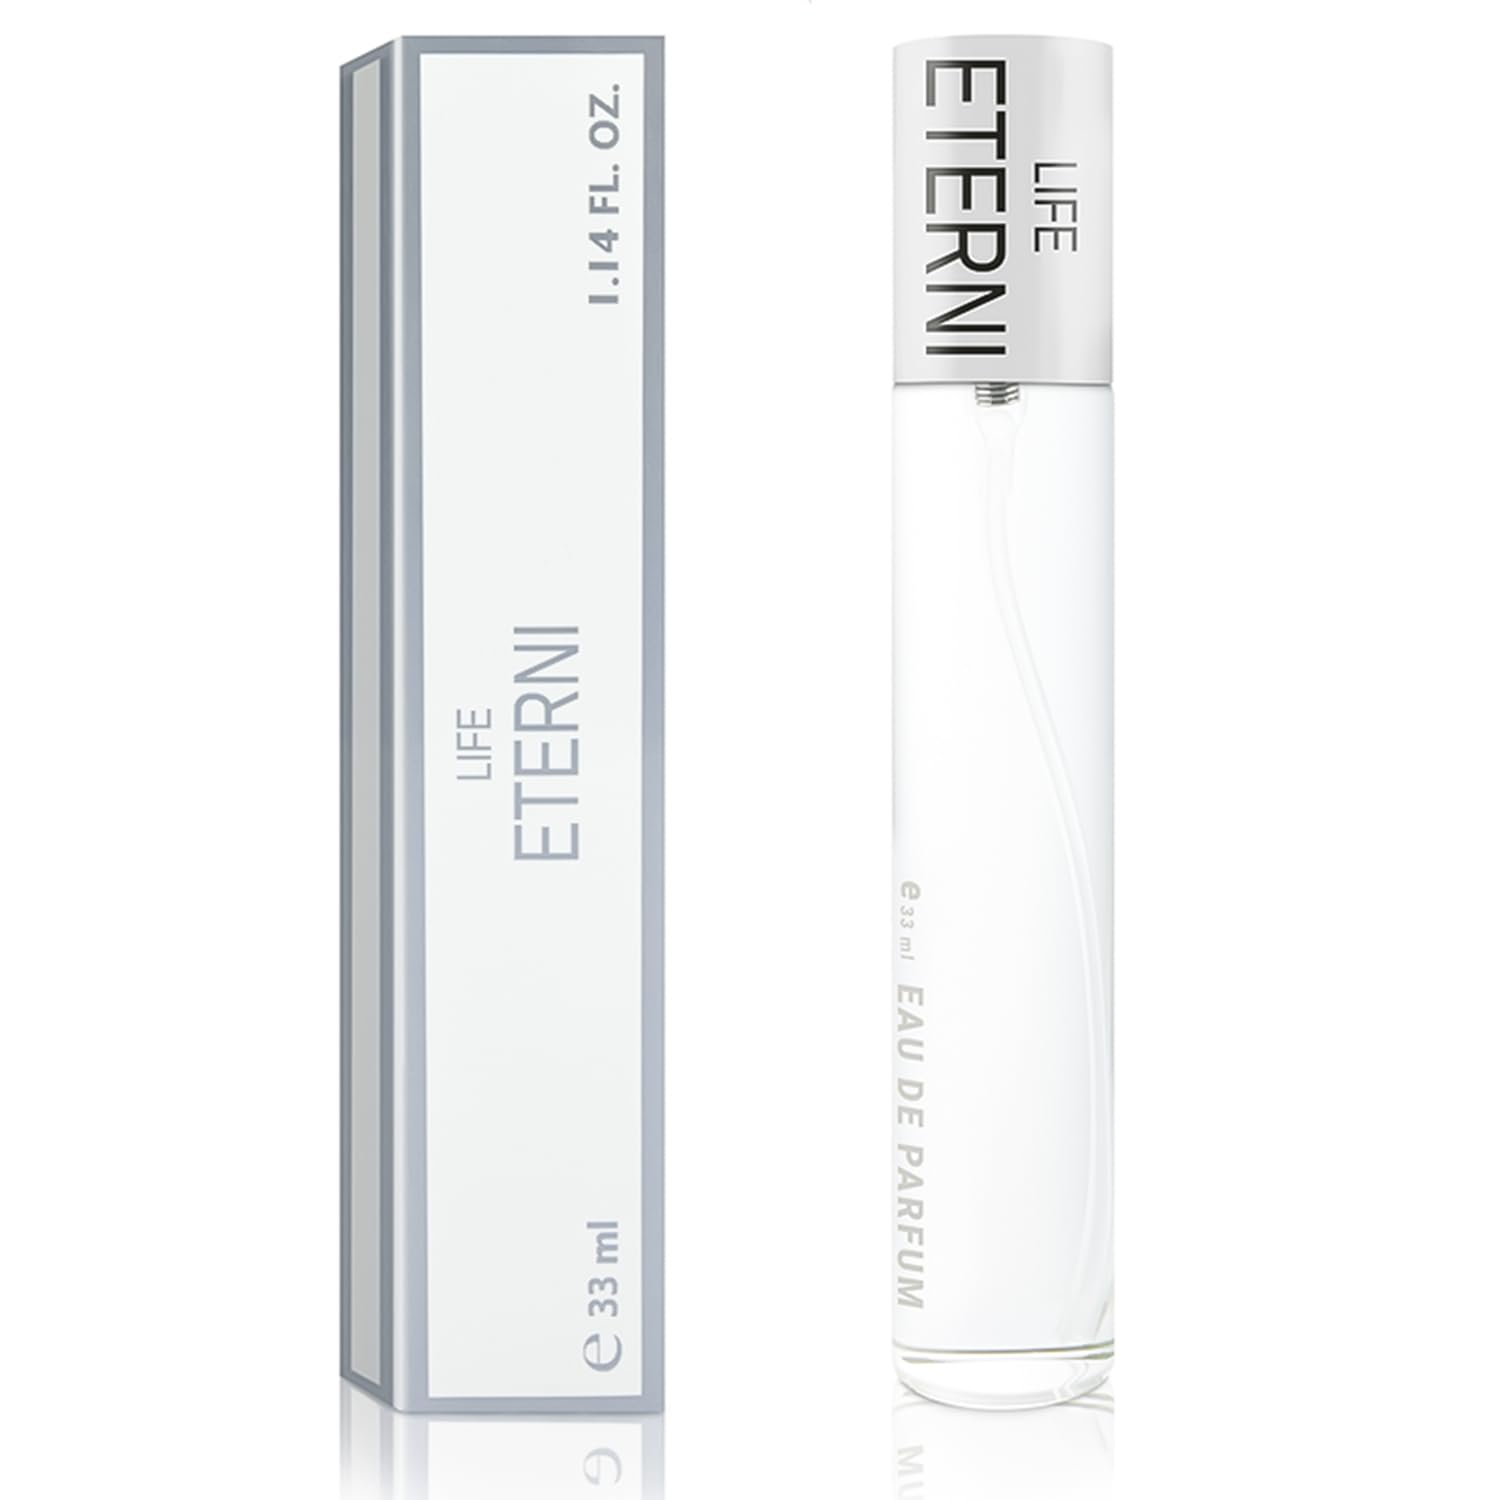 Perfume Women\'s Fragrance Spray - The Inspired Pendant as Eau de Parfum for Driver and Car - 33 ml Bottle for Handbag & On the Go (Eterni)